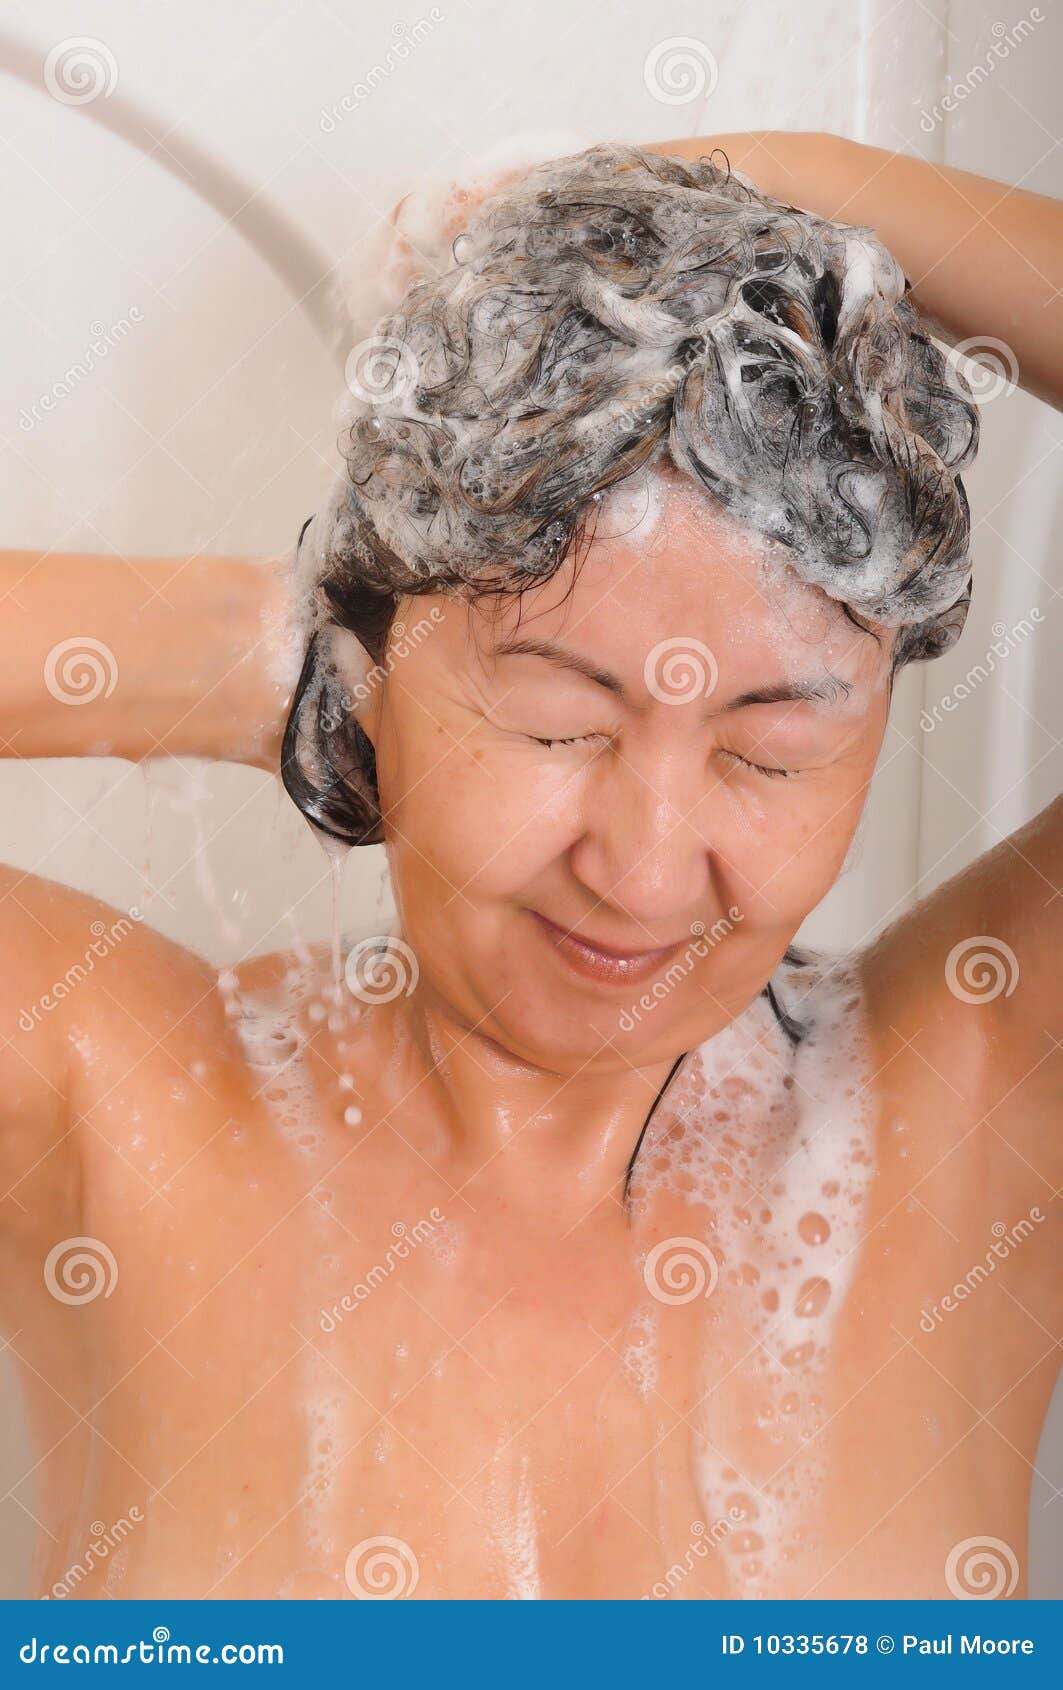 Asian Shower 67